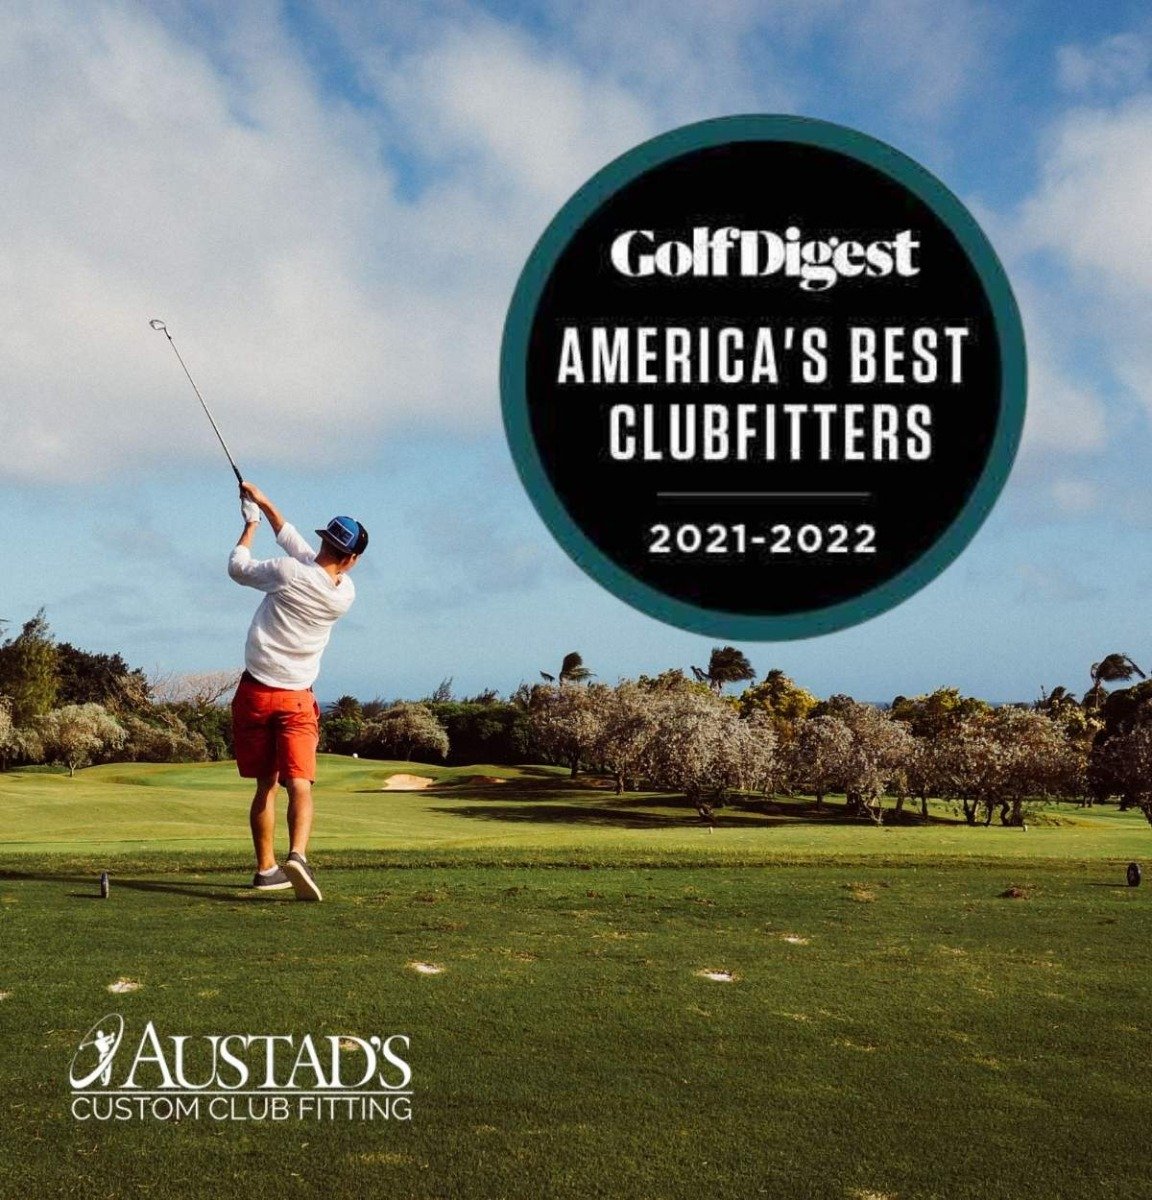 Why Austad's Golf